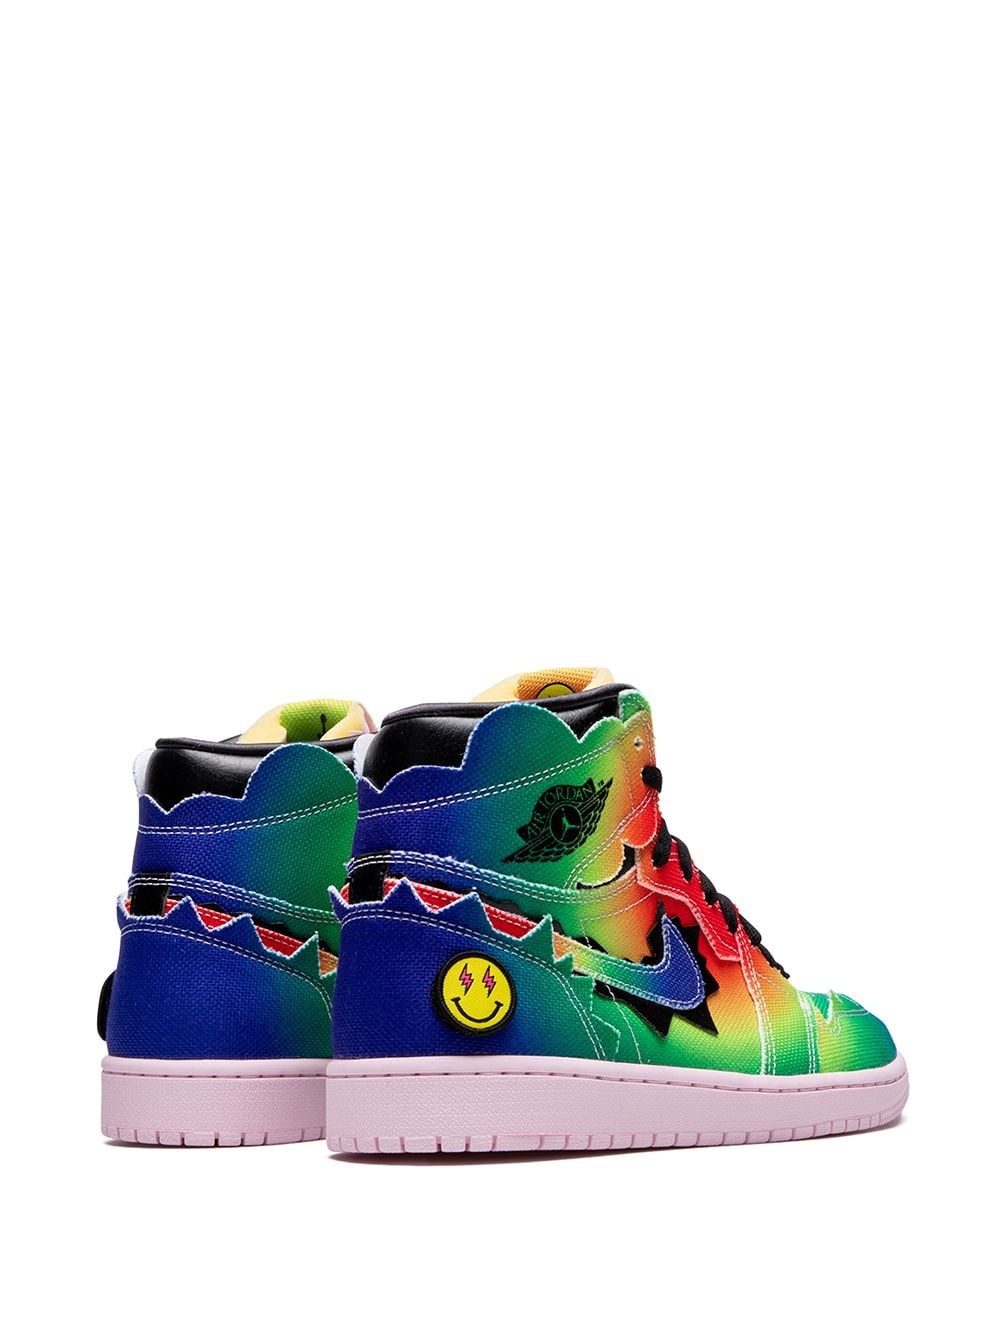 Air Jordan 1 Retro High J. Balvin "Colores y Vibras" sneakers - 3